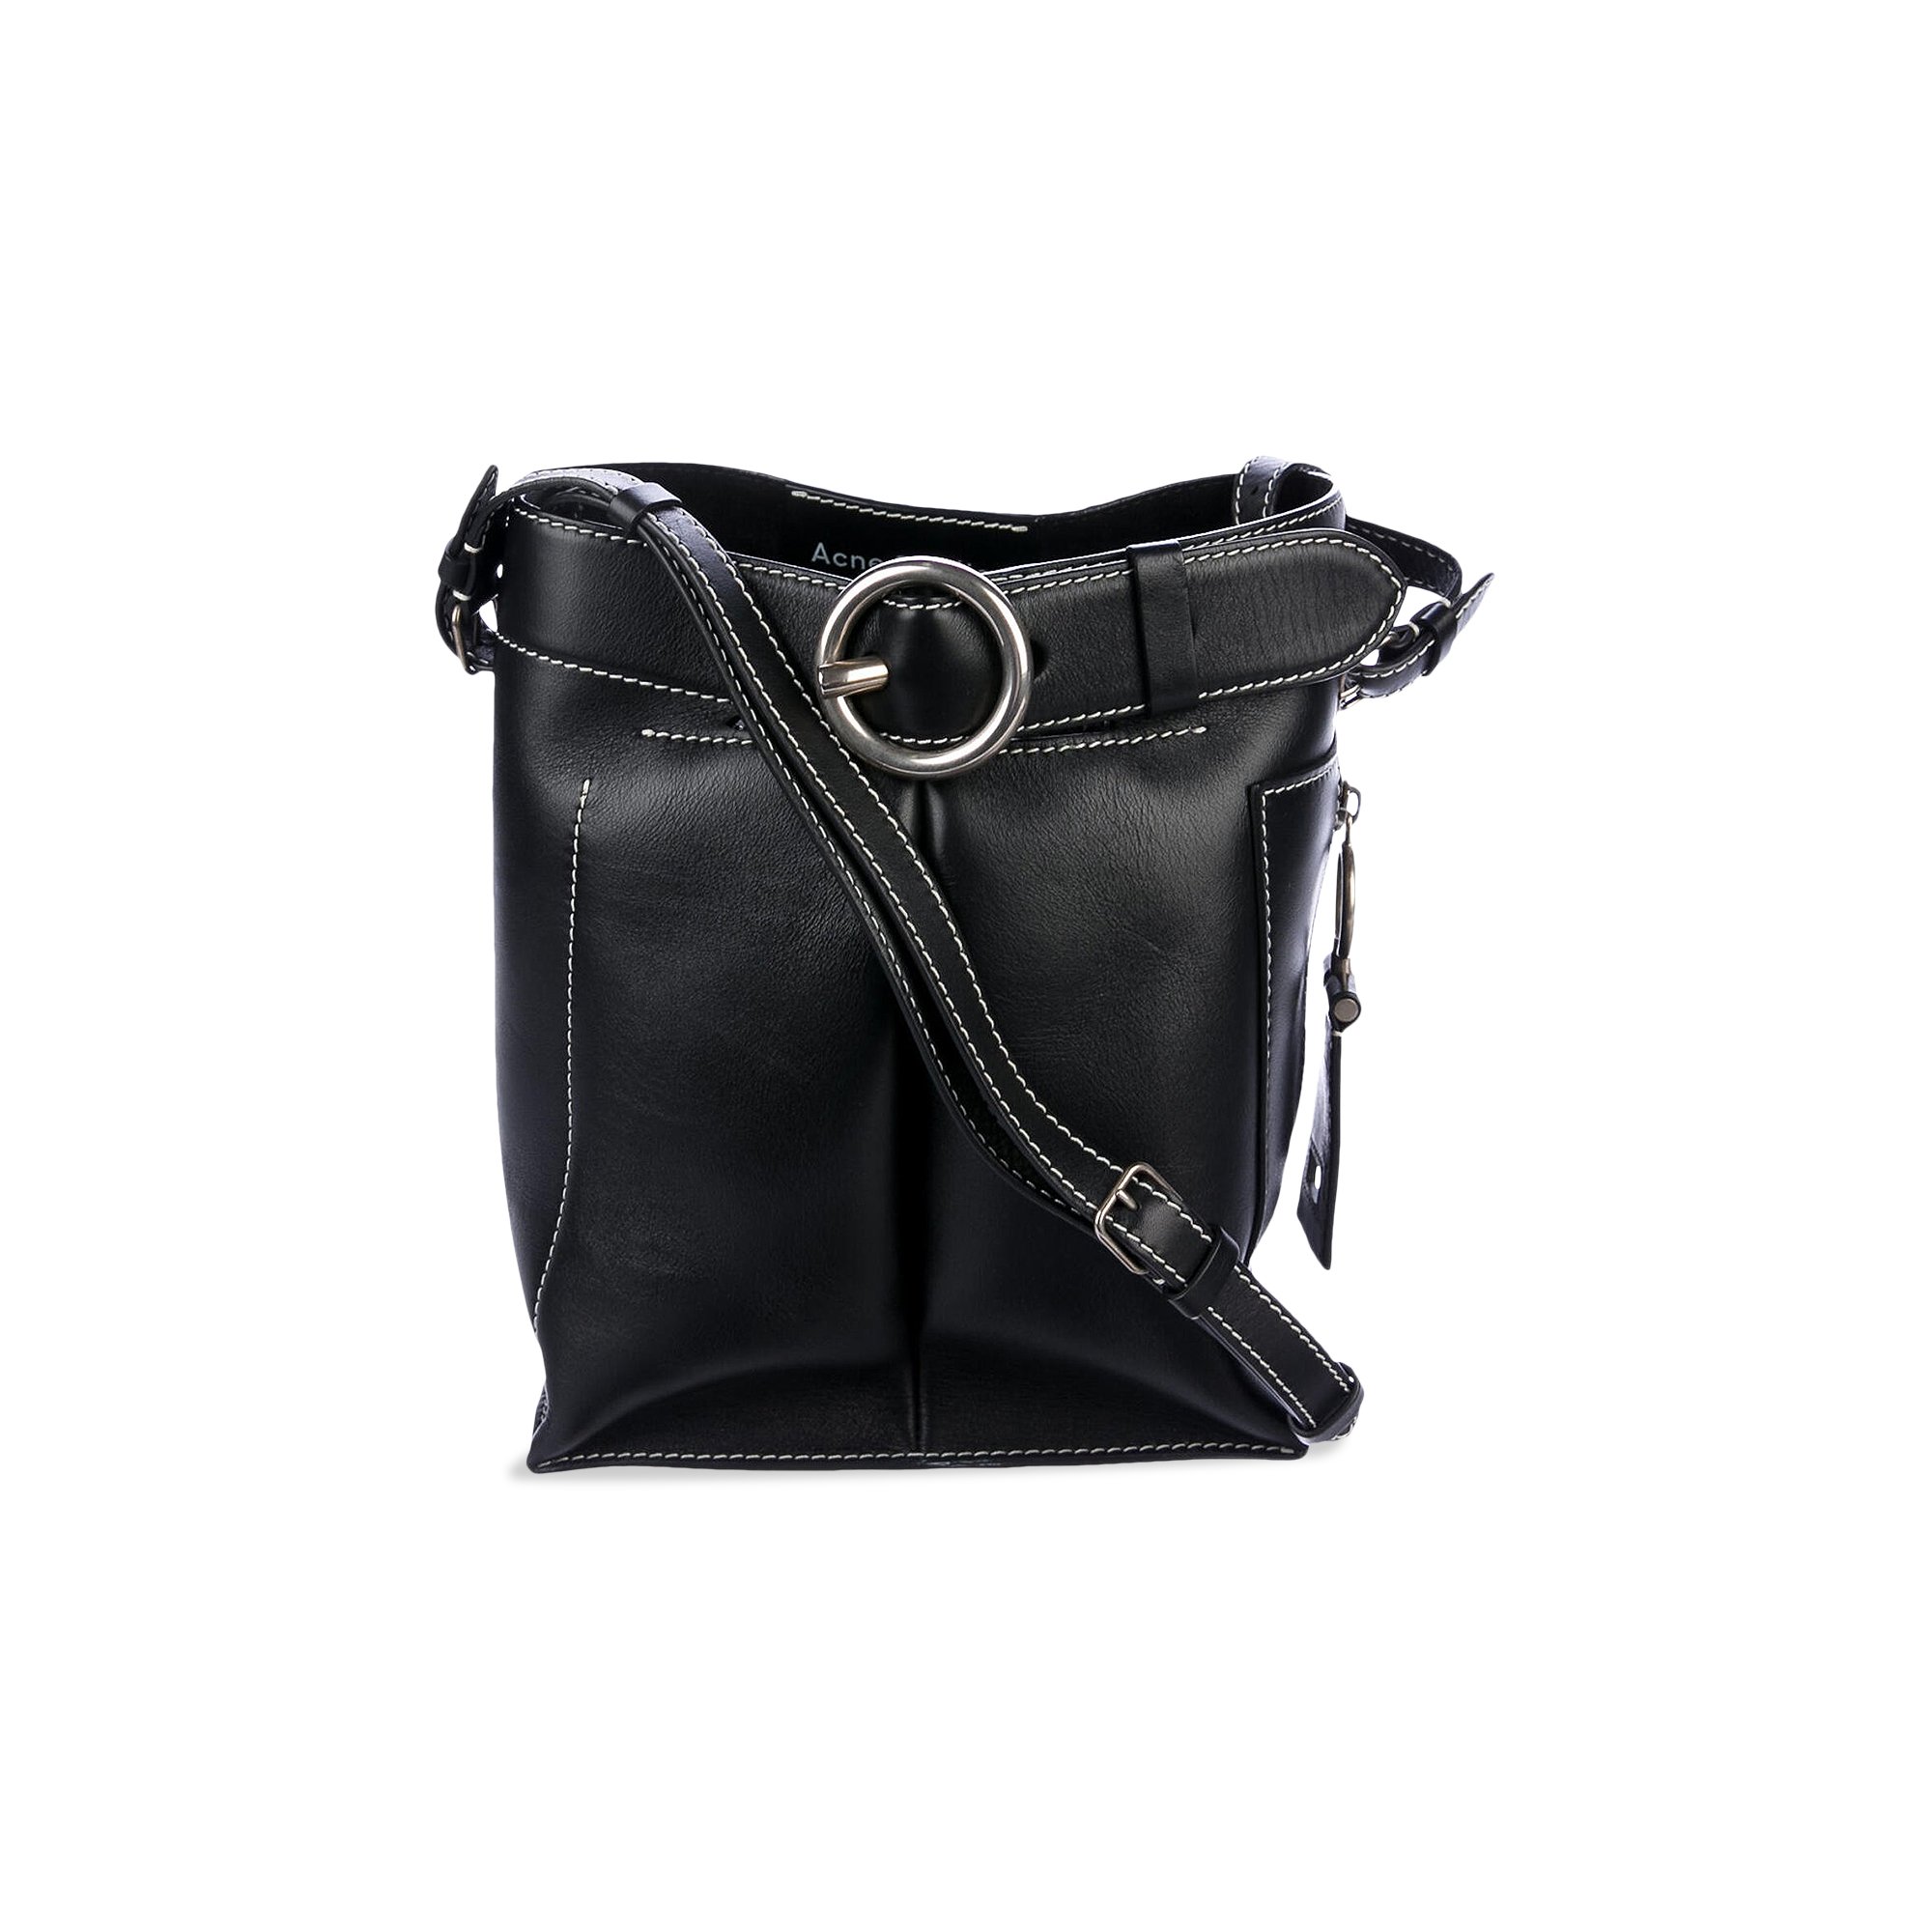 Buy Acne Studios Leather Buckle Bag 'Black' - 0352 200000408LBB